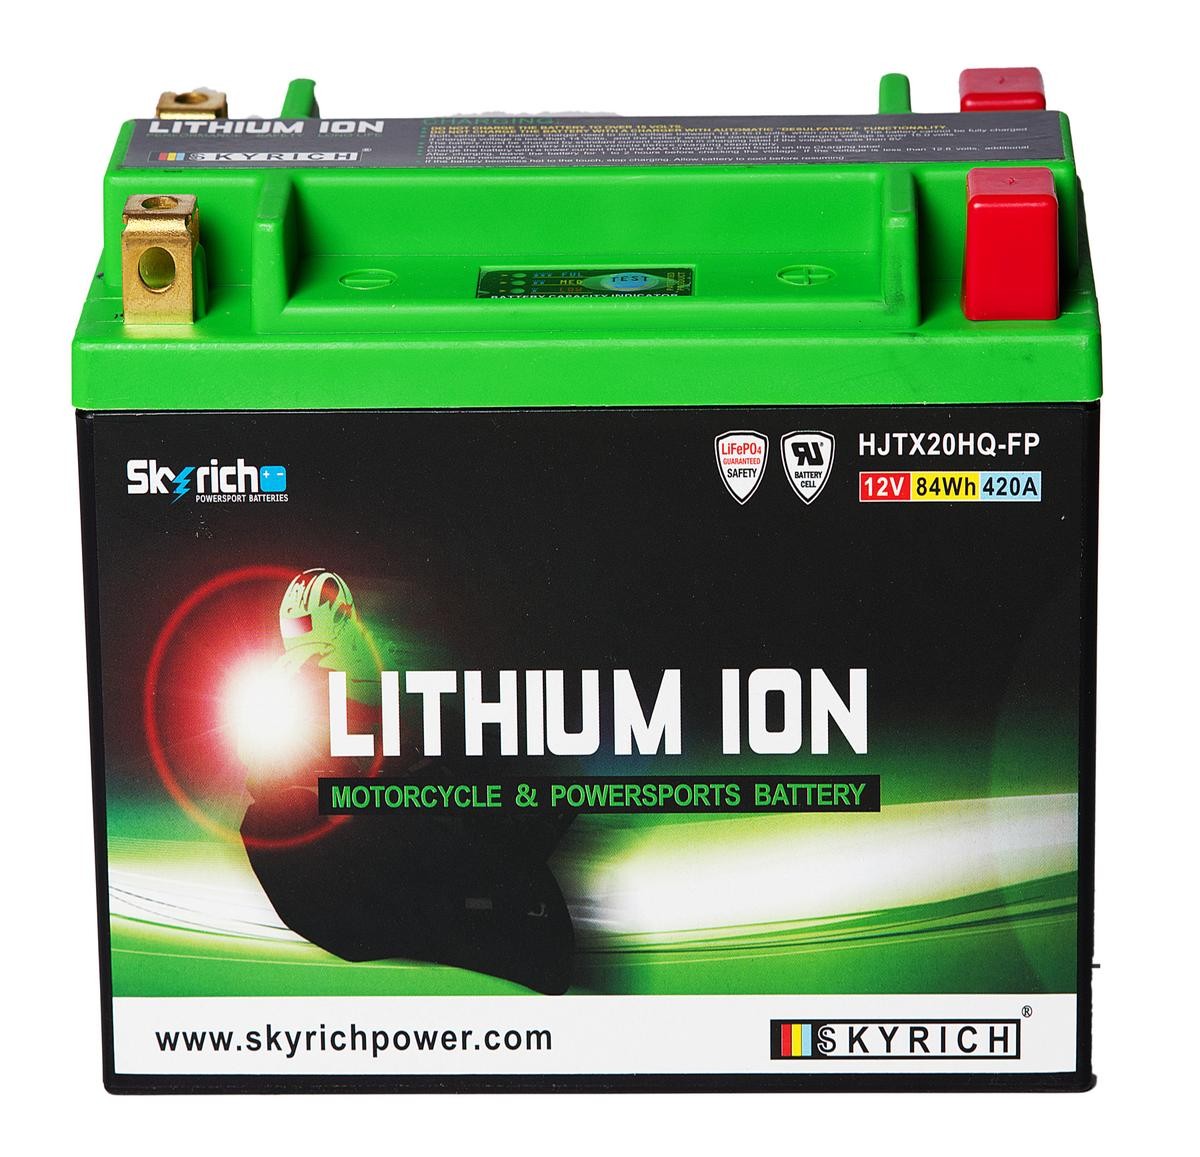 Batterie HJTX20HQ-FP Niedrige Preise - Jetzt kaufen!